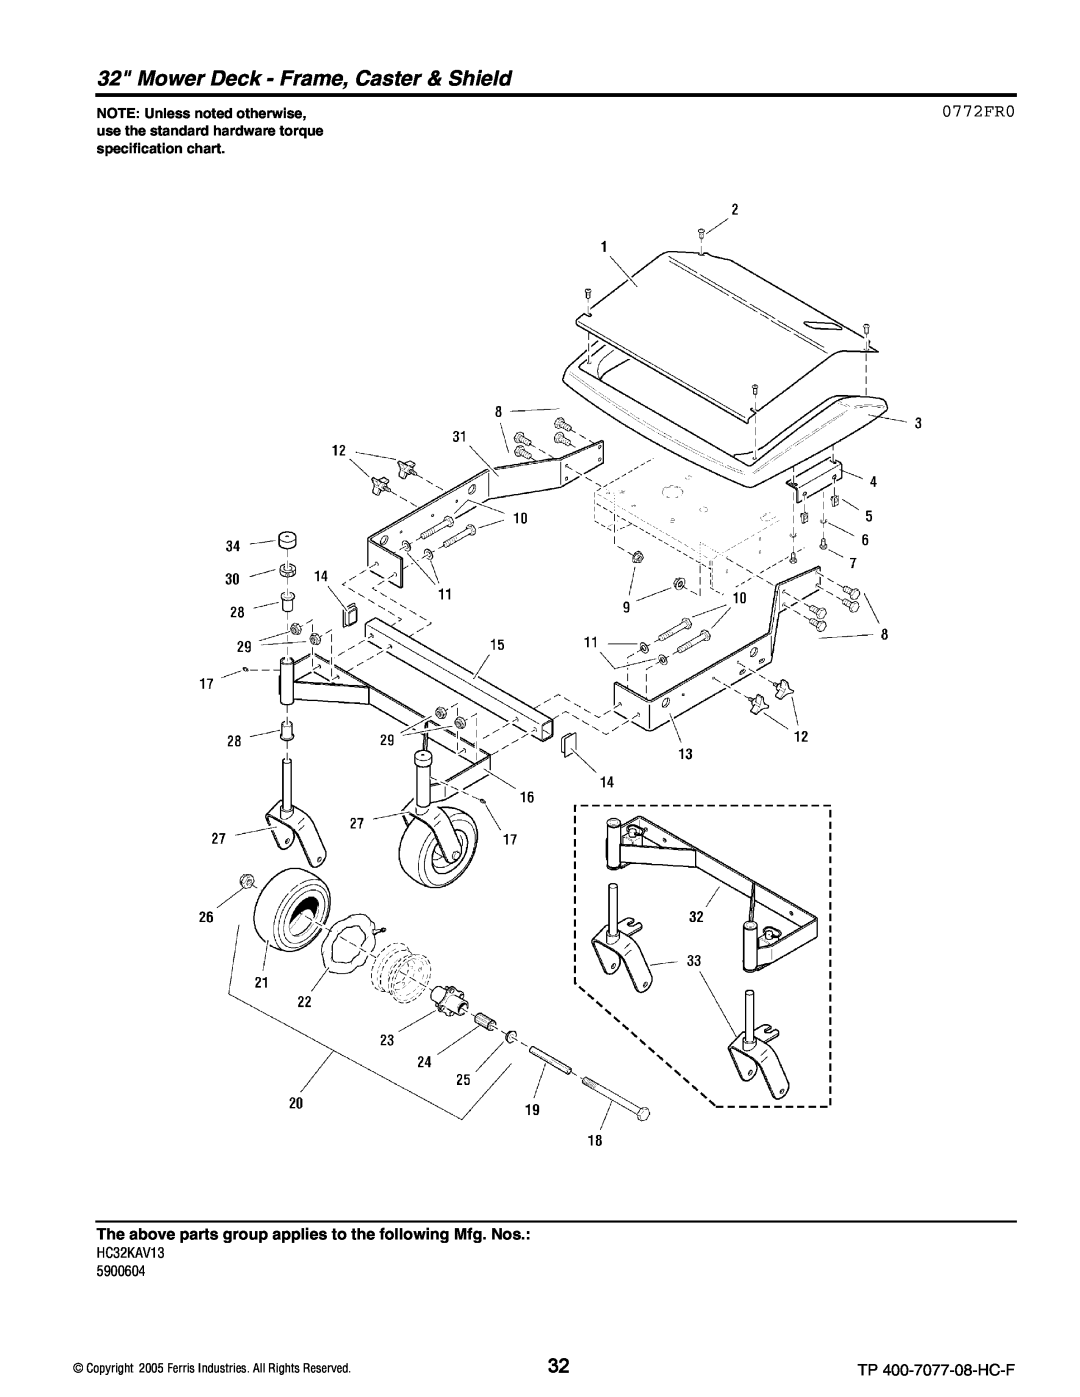 Ferris Industries HC32KAV13, HC36KAV13E manual Mower Deck - Frame, Caster & Shield, 0772FR0, NOTE Unless noted otherwise 